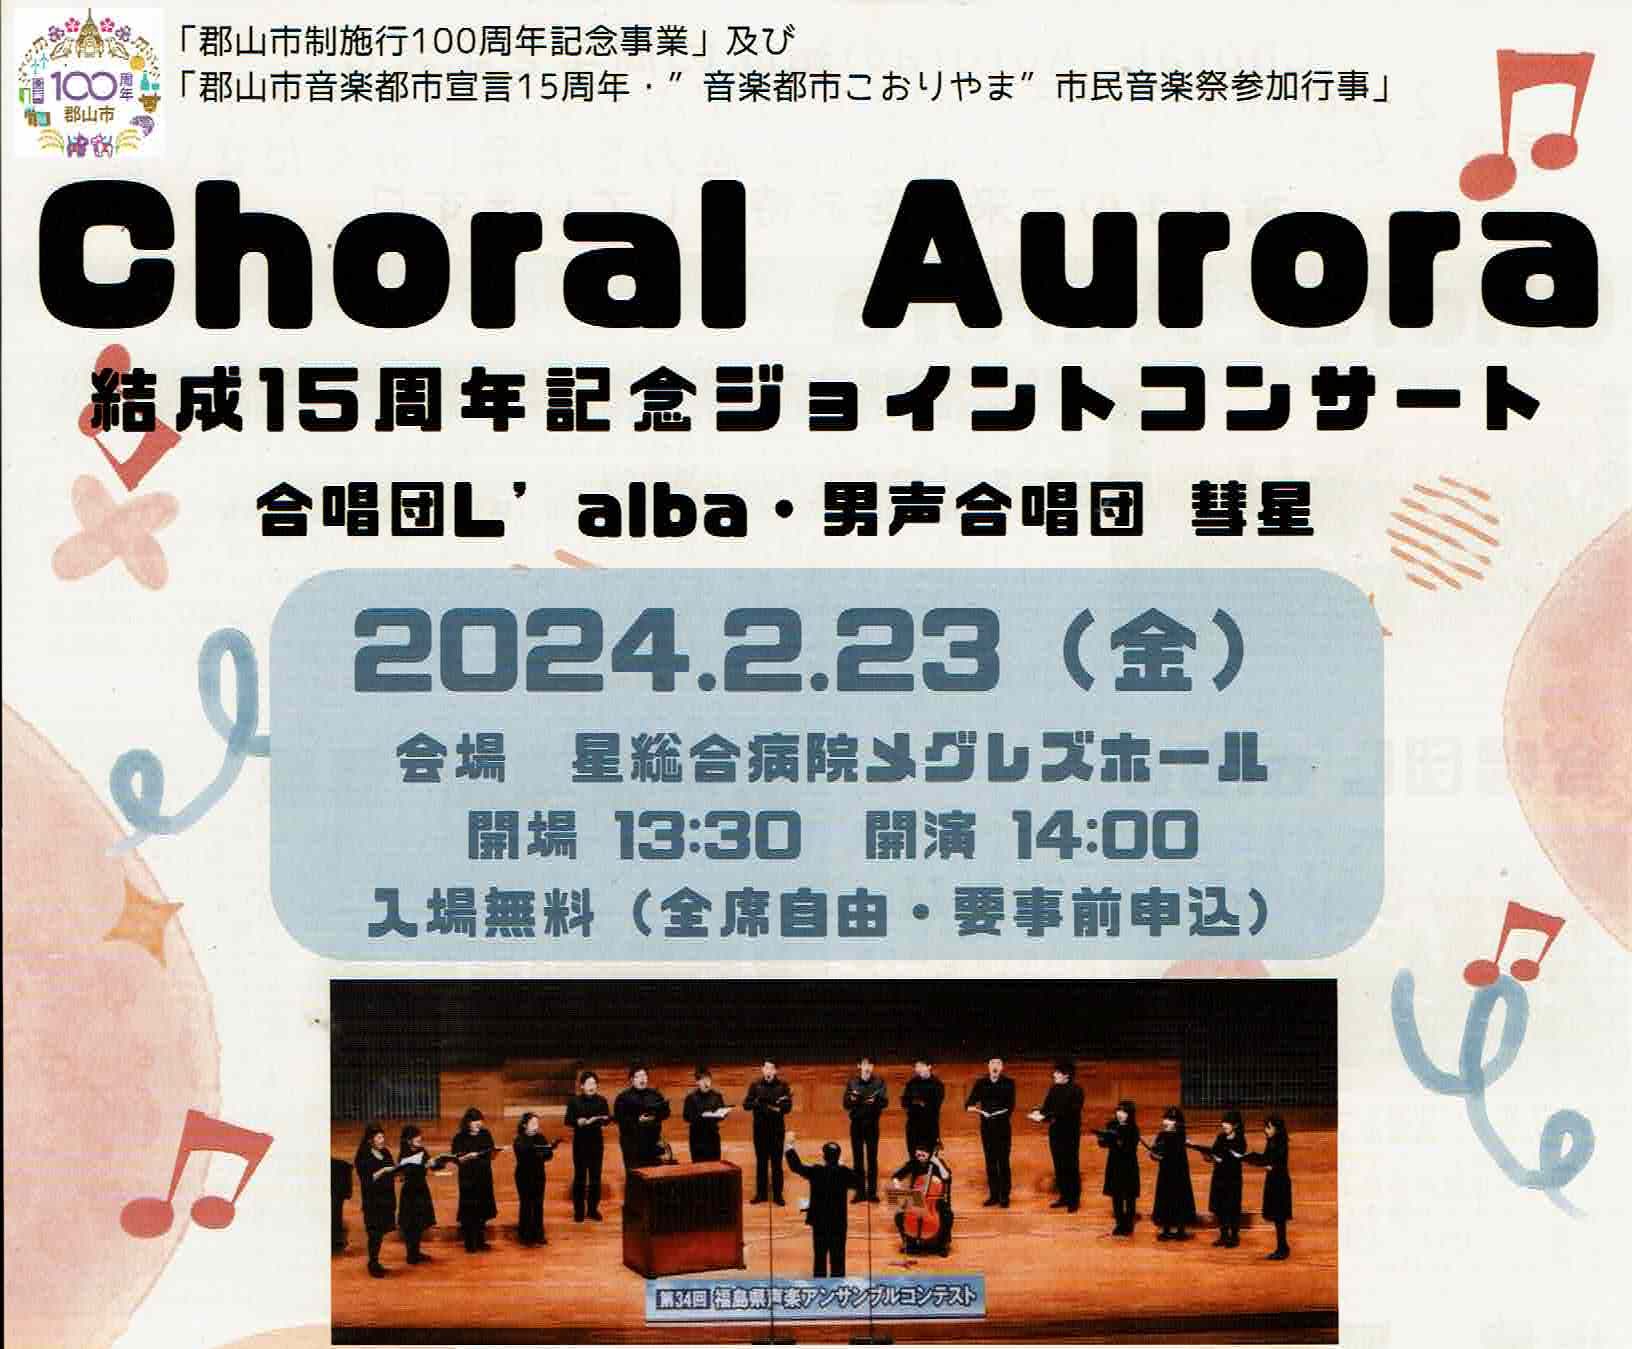 Choral Aurora結成15年記念ジョイントコンサート◆2月23日(金祝)